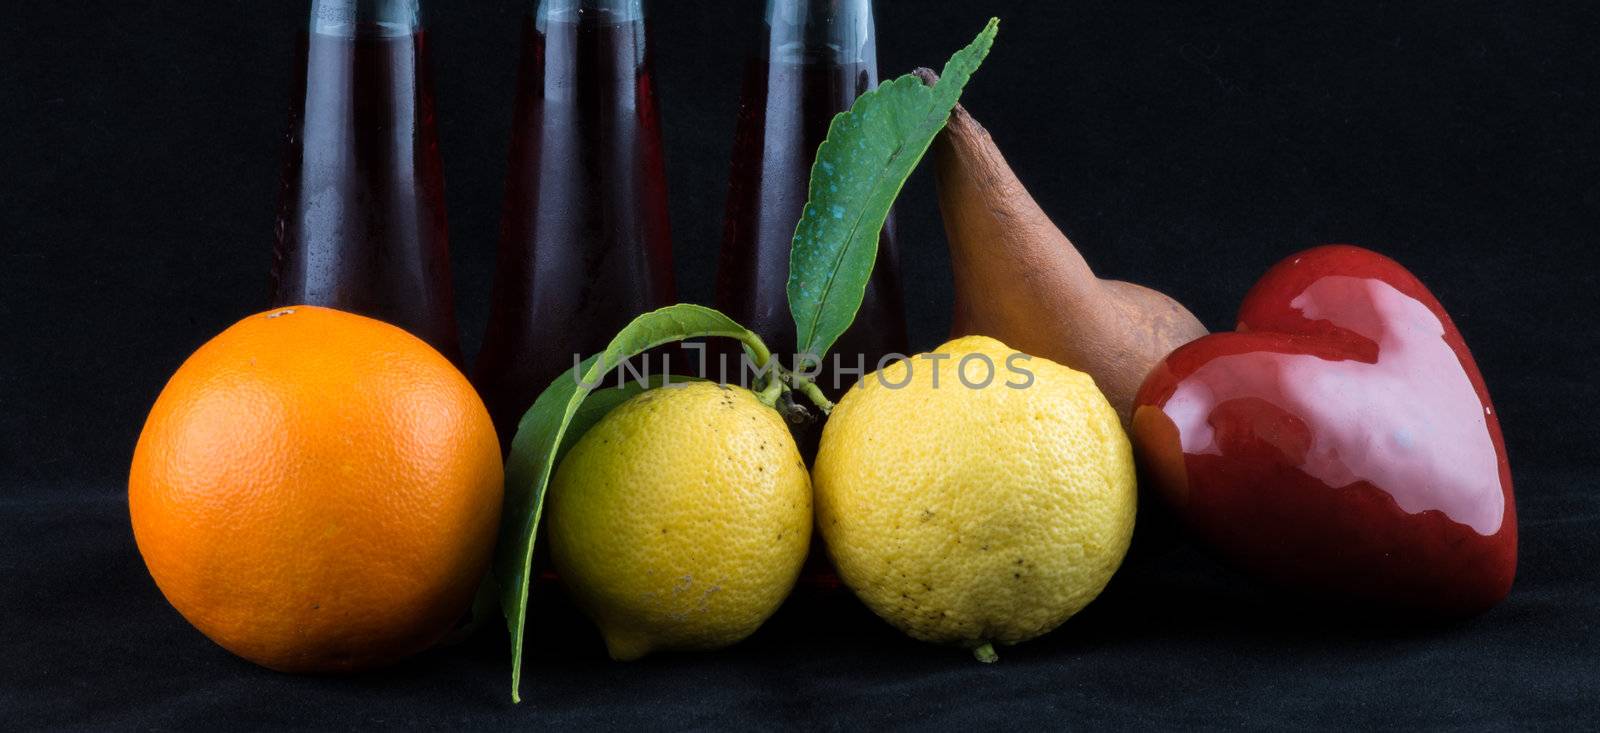 Orange, Lemon and Pear on black background.